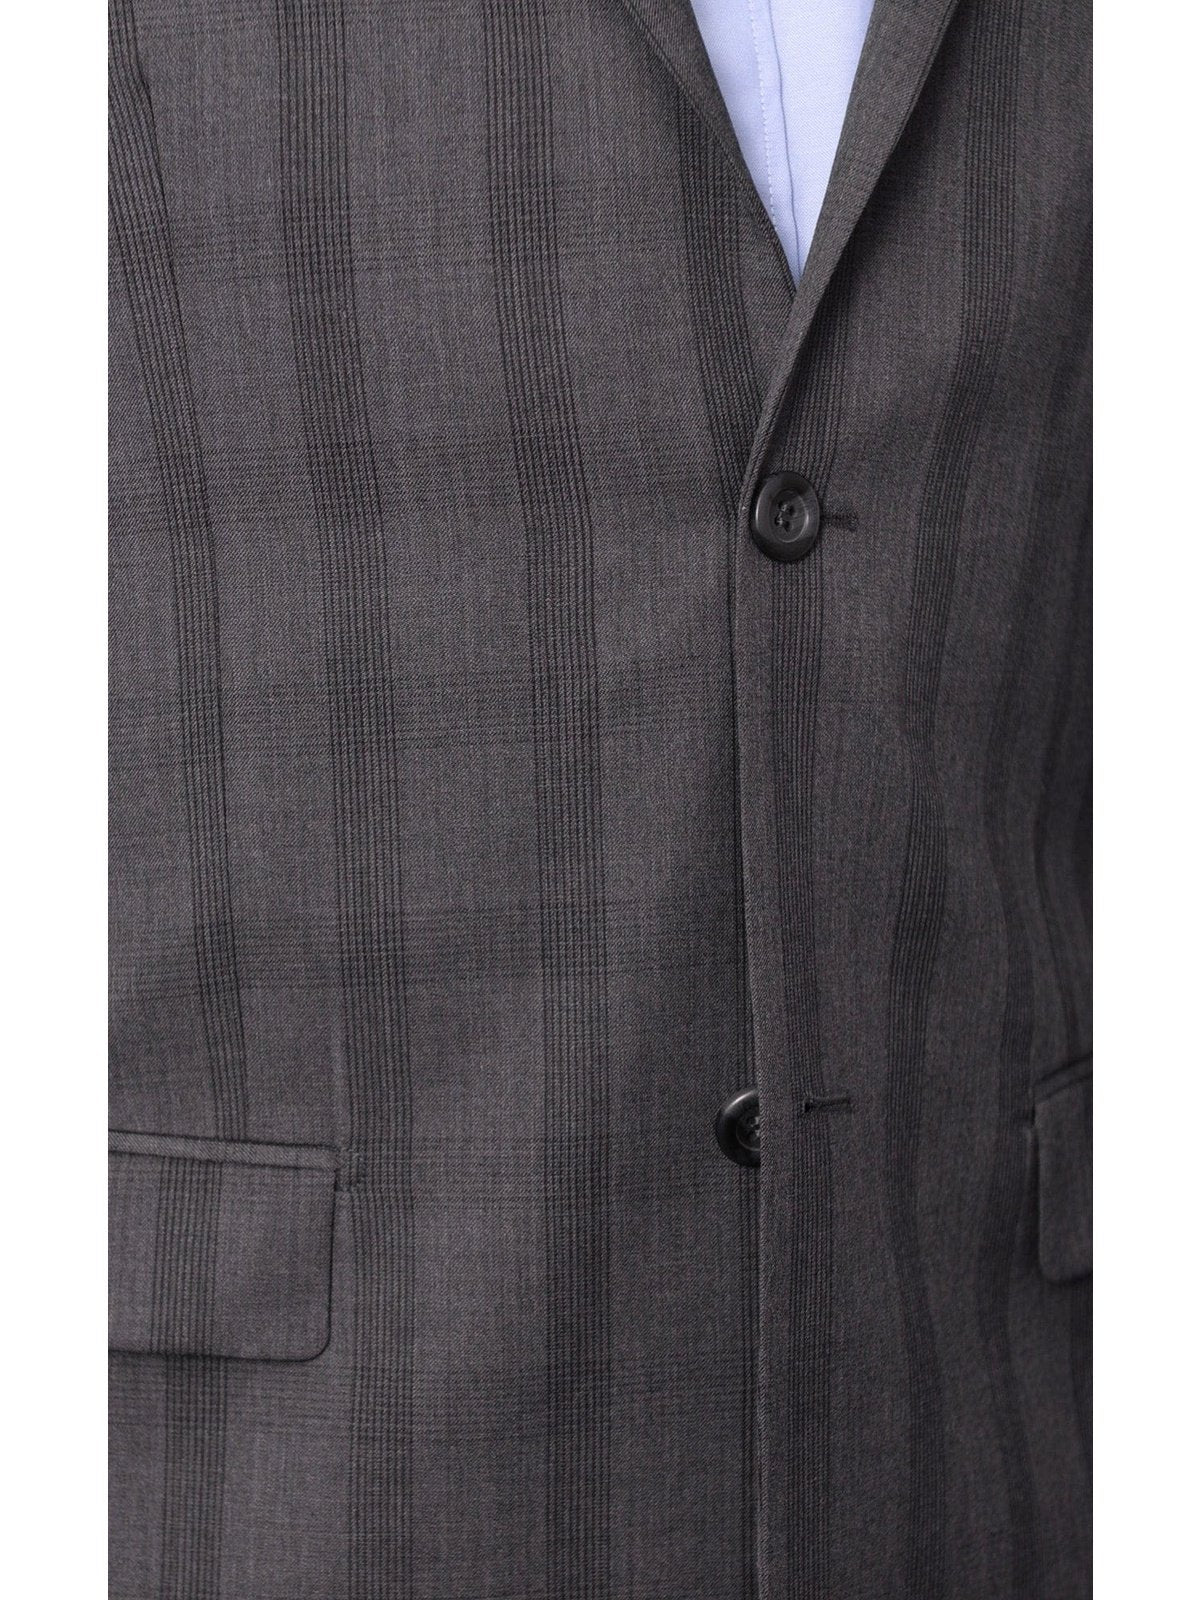 Prontomoda BLAZERS Prontomoda Men's Gray Plaid 100% Wool Slim Fit Blazer Sport Coat